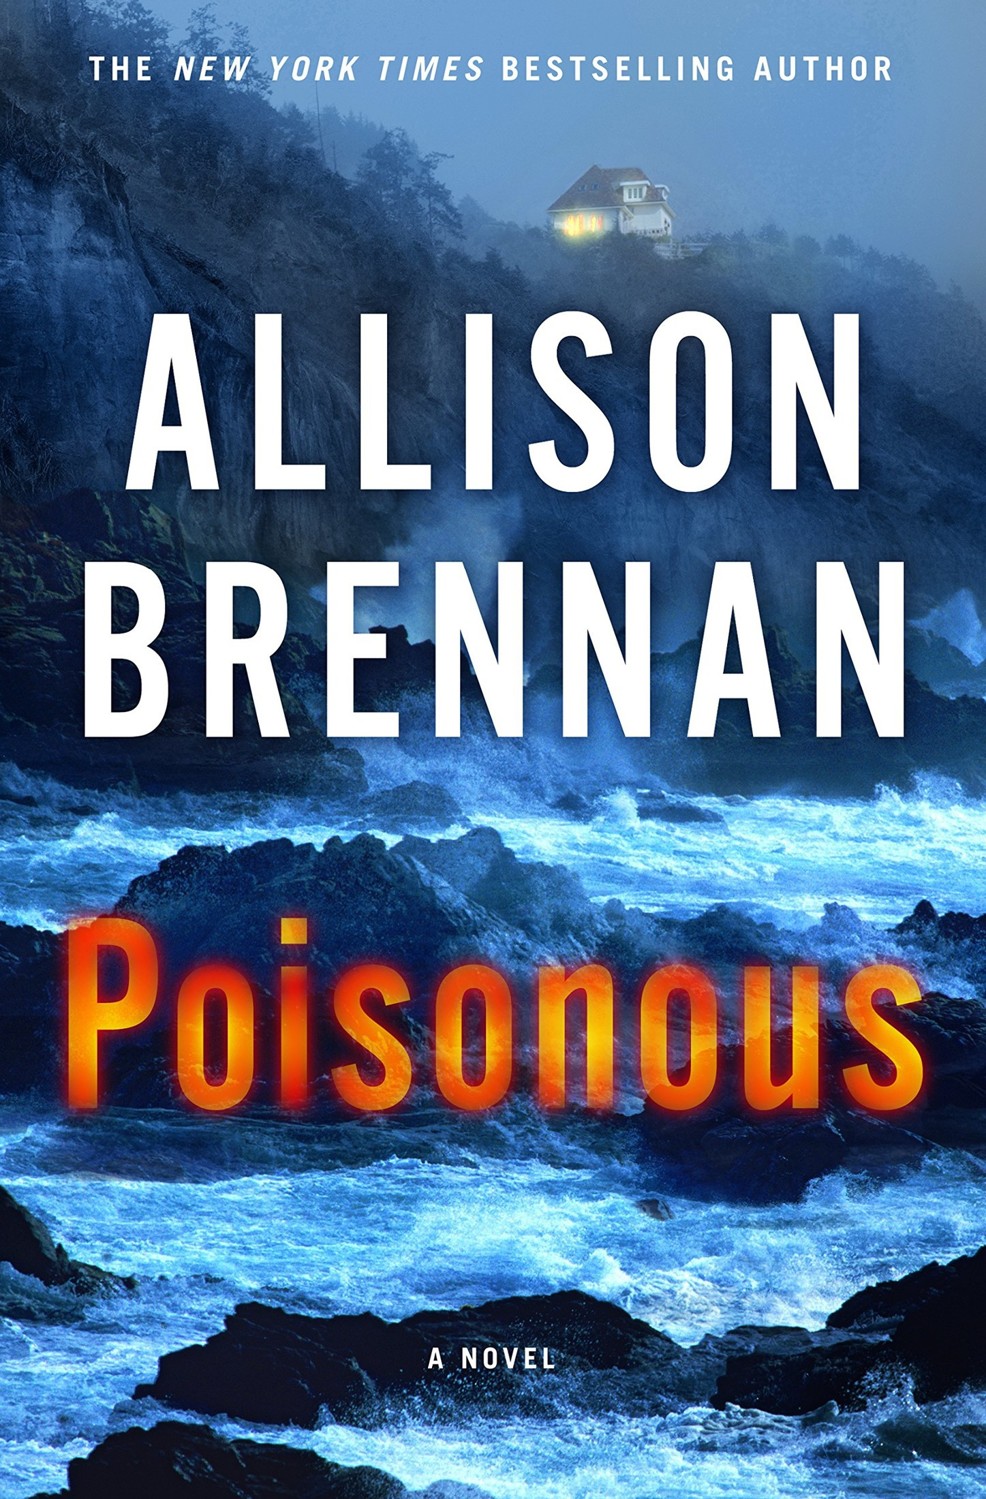 Poisonous: A Novel by Allison Brennan